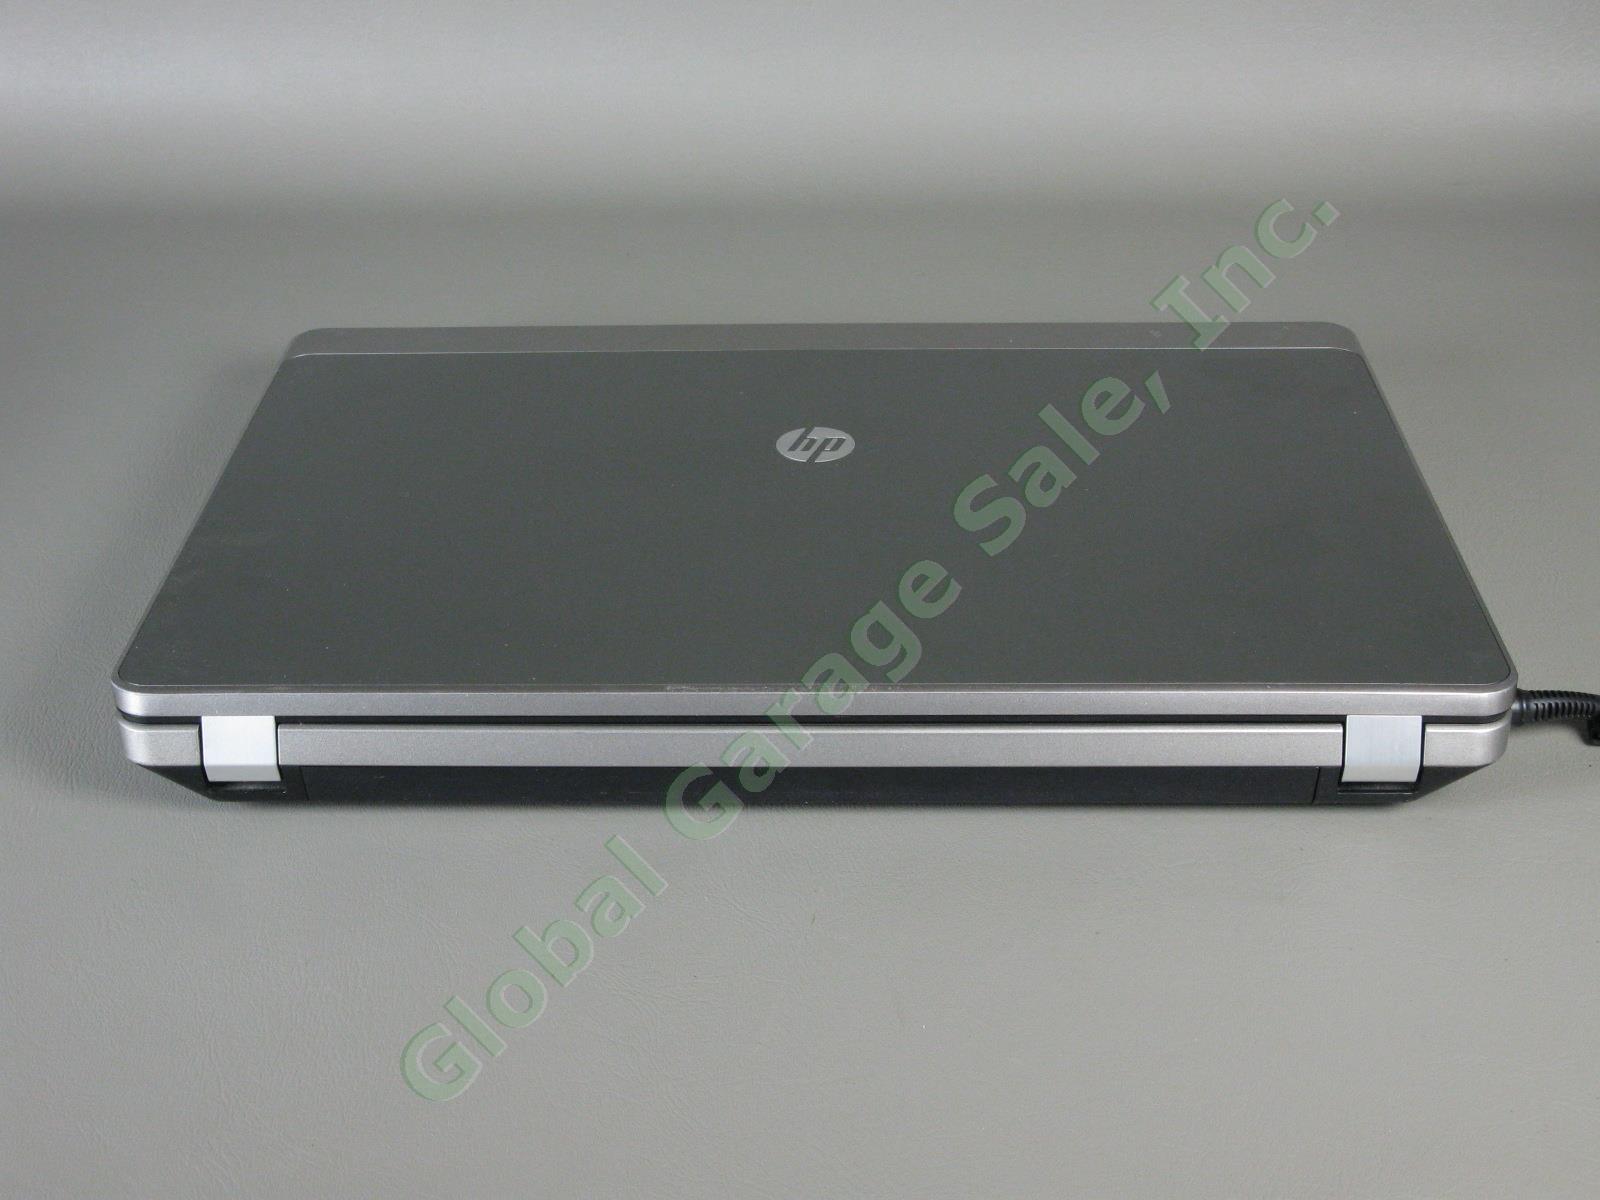 HP ProBook 4530s Laptop Computer Intel i5 2.30GHz 300GB HDD 2GB RAM Win 10 Pro 4